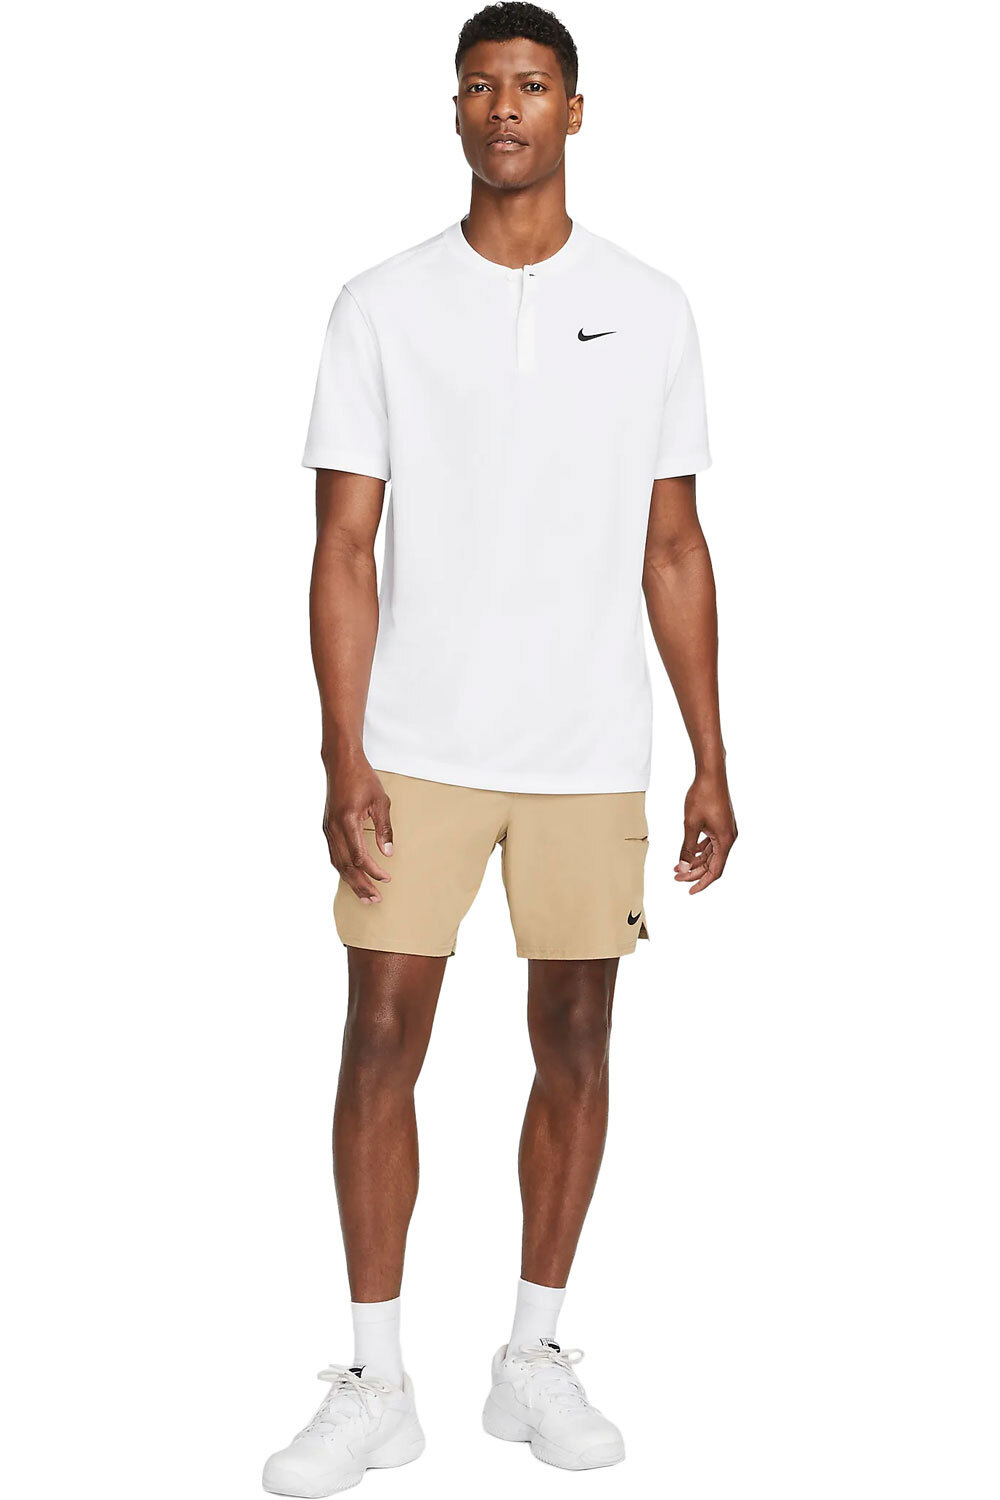 Nike camiseta tenis manga corta hombre M NKCT DF POLO BLADE SOLID vista frontal